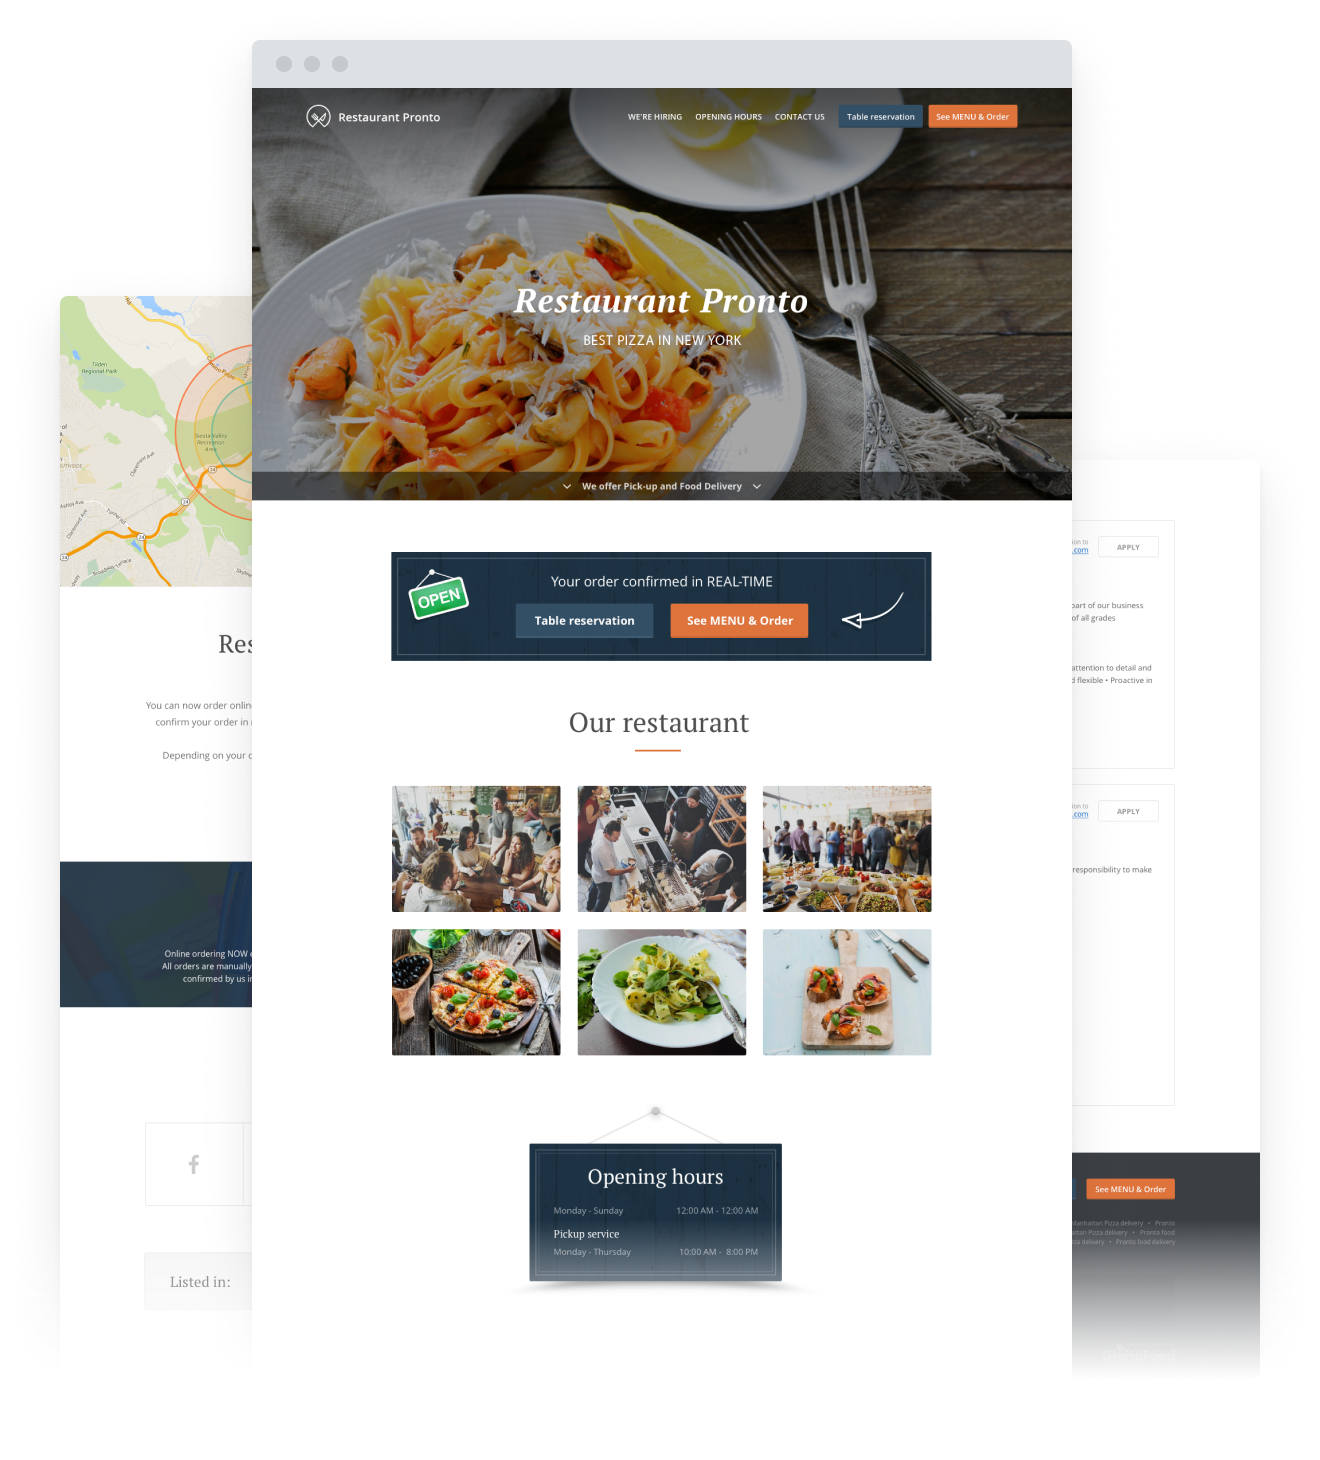 Free Online Ordering System for Restaurants